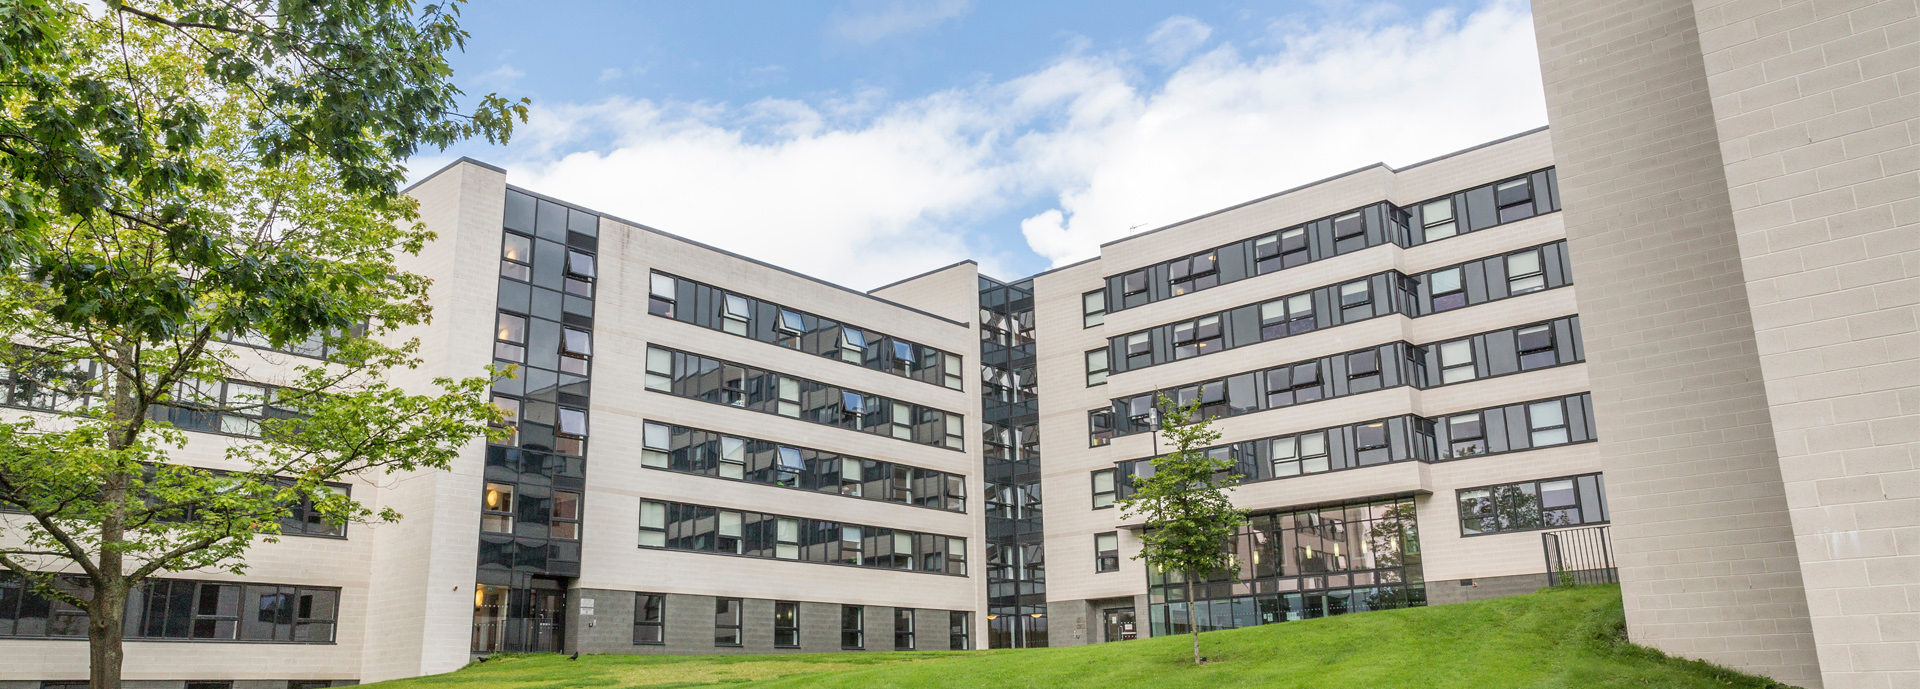 Beech Court standard flats accommodation,  University of Stirling